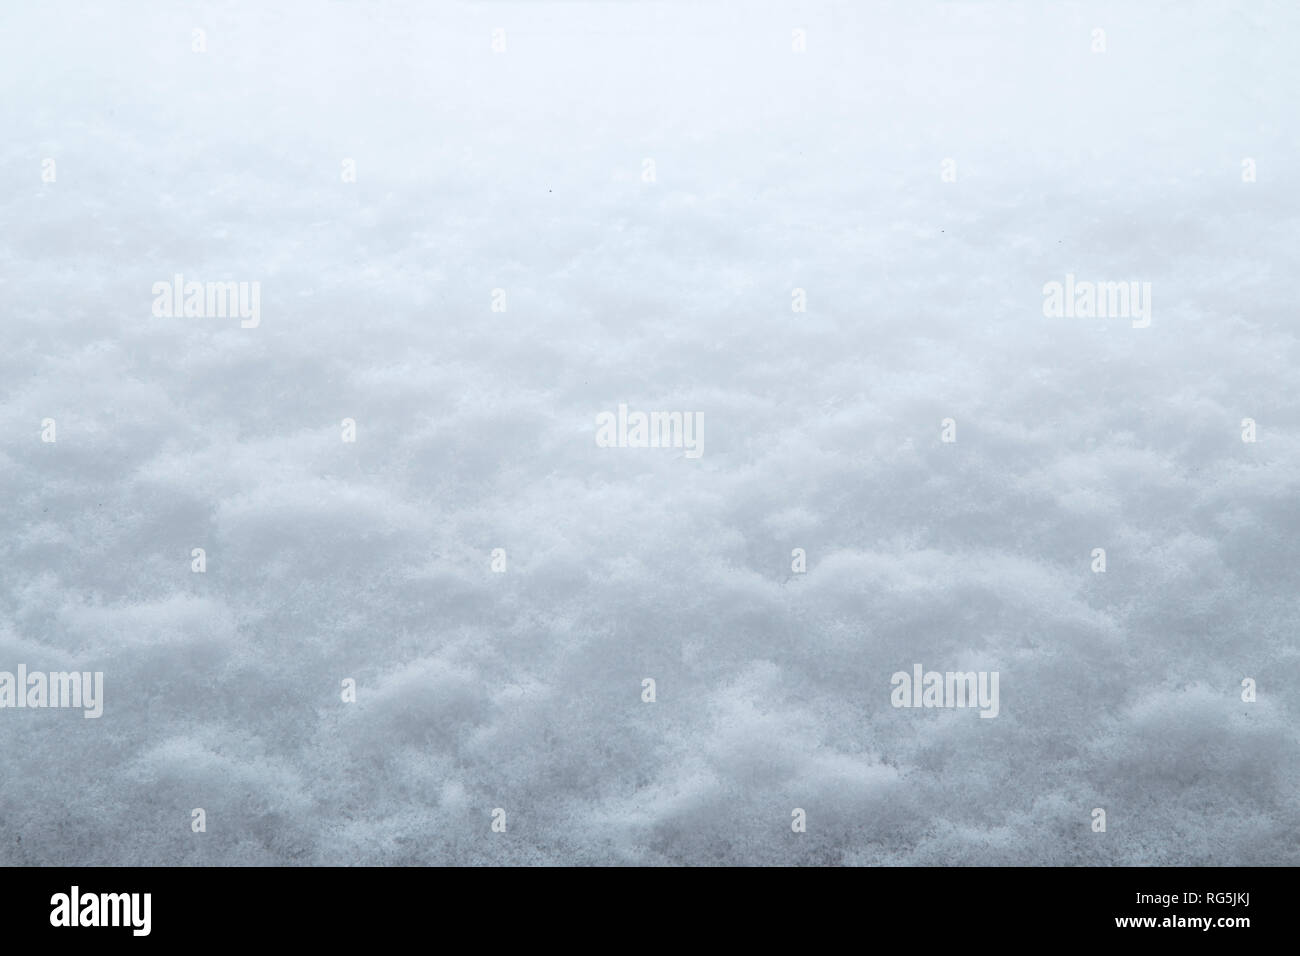 White fluffy snow as background Stock Photo